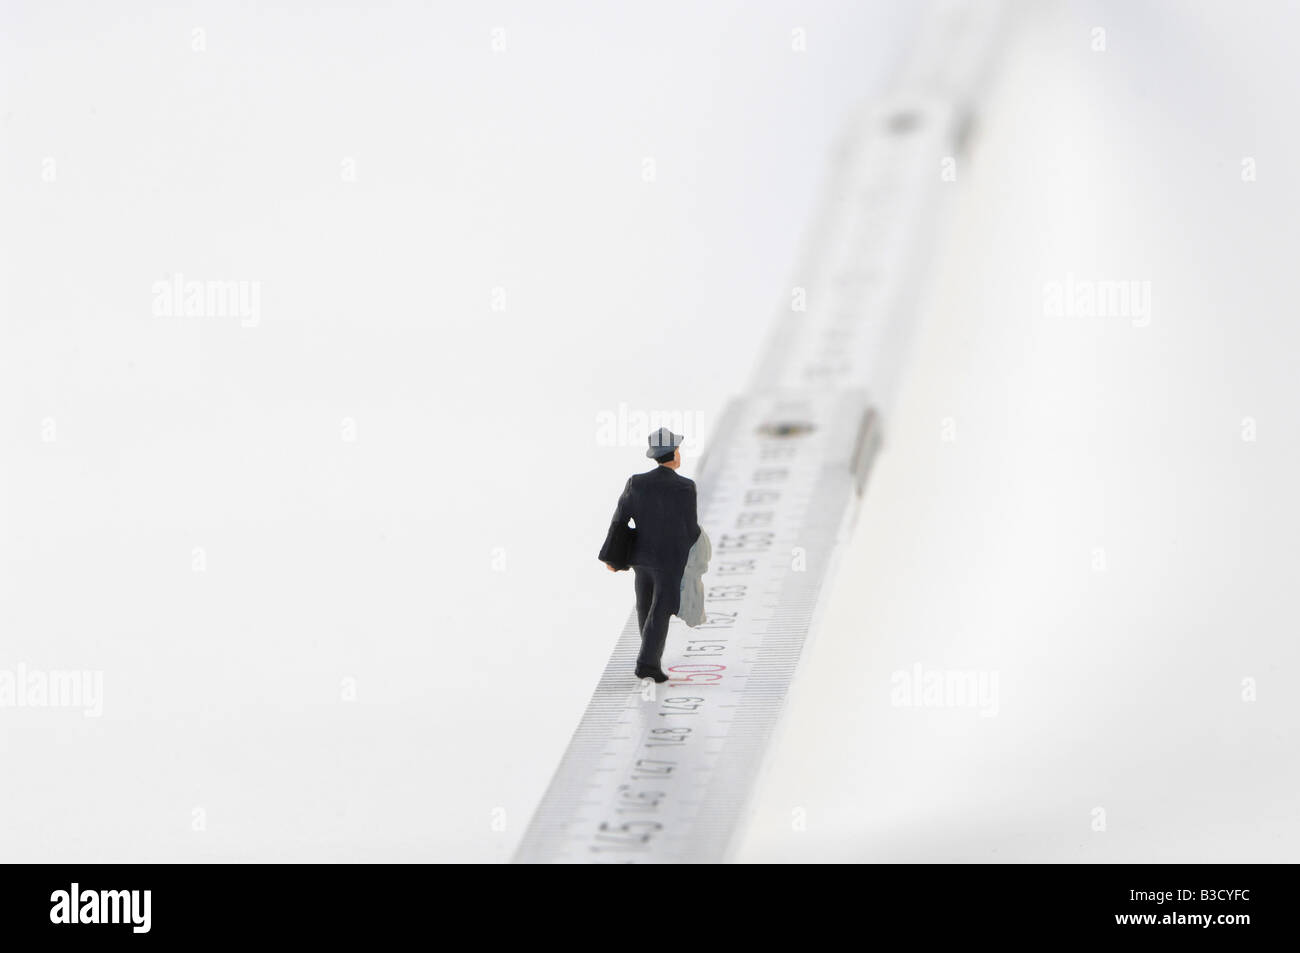 Business man figurine walking on measuring tape Stock Photo